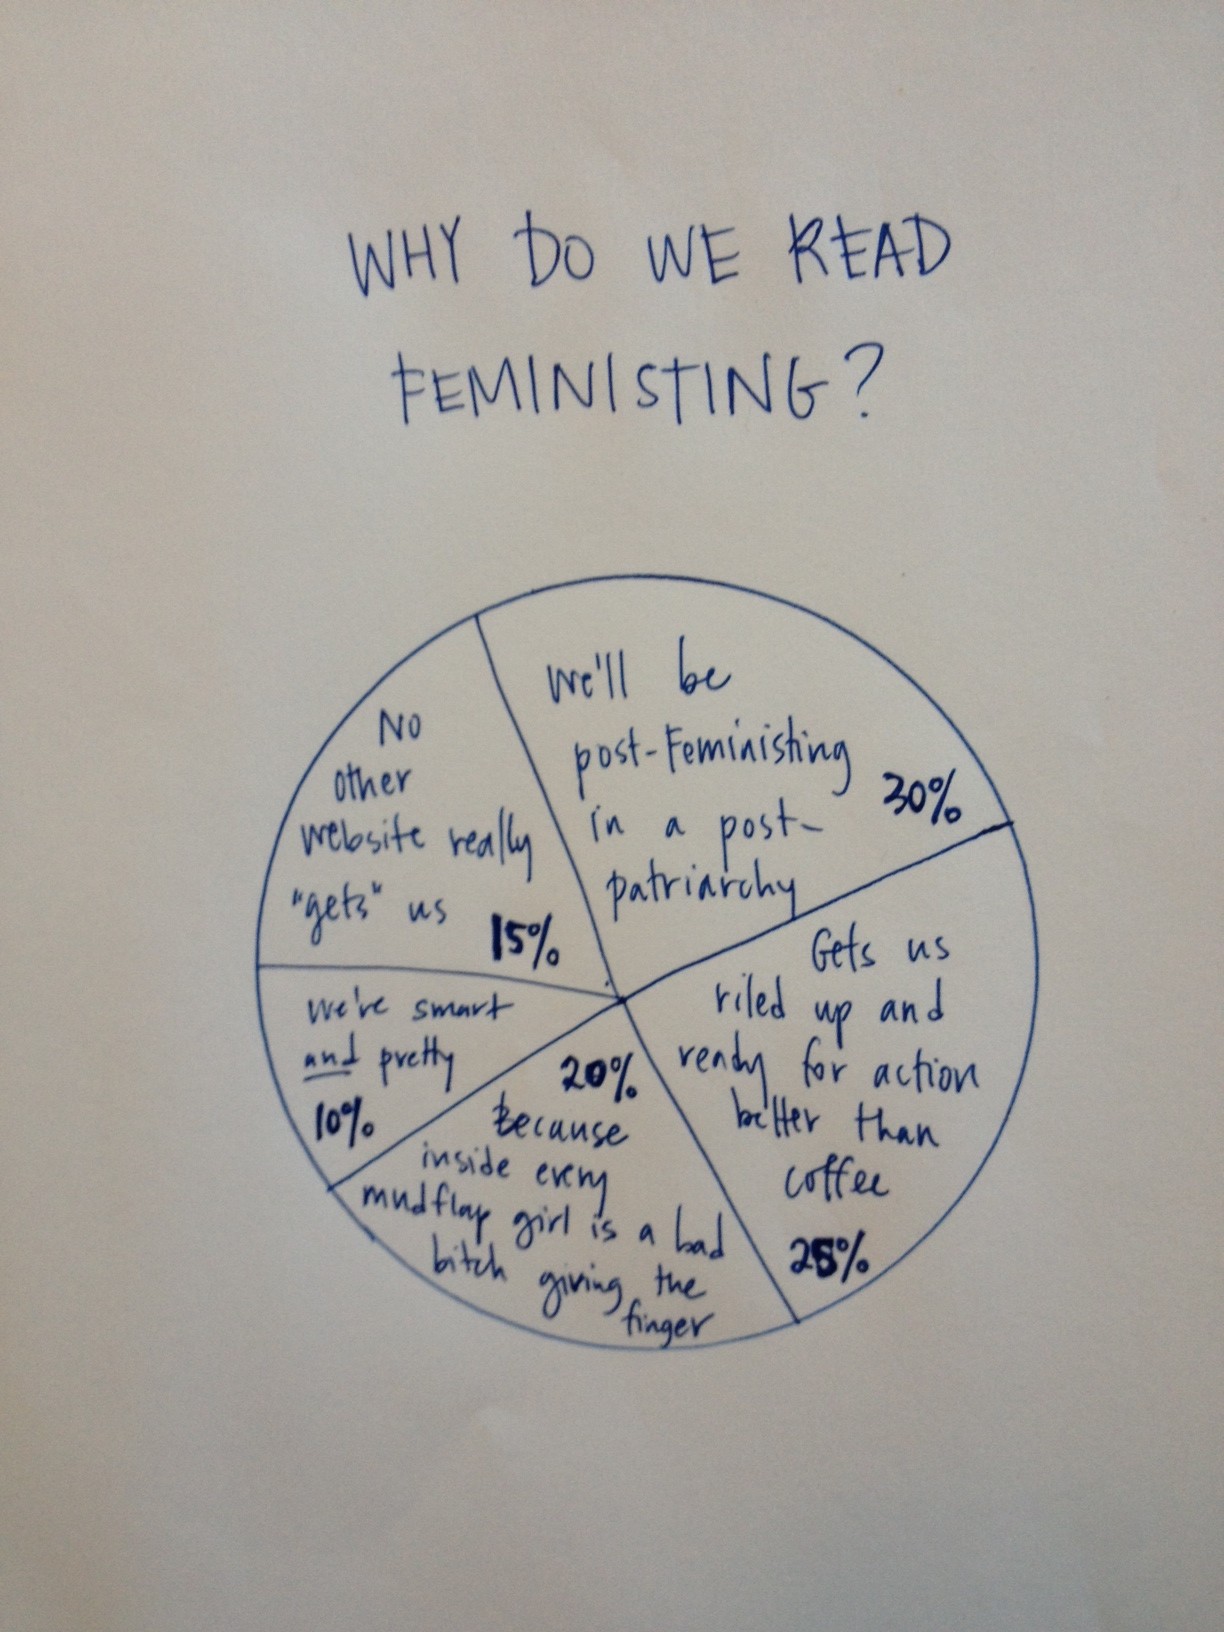 Why do we read Feminsiting?